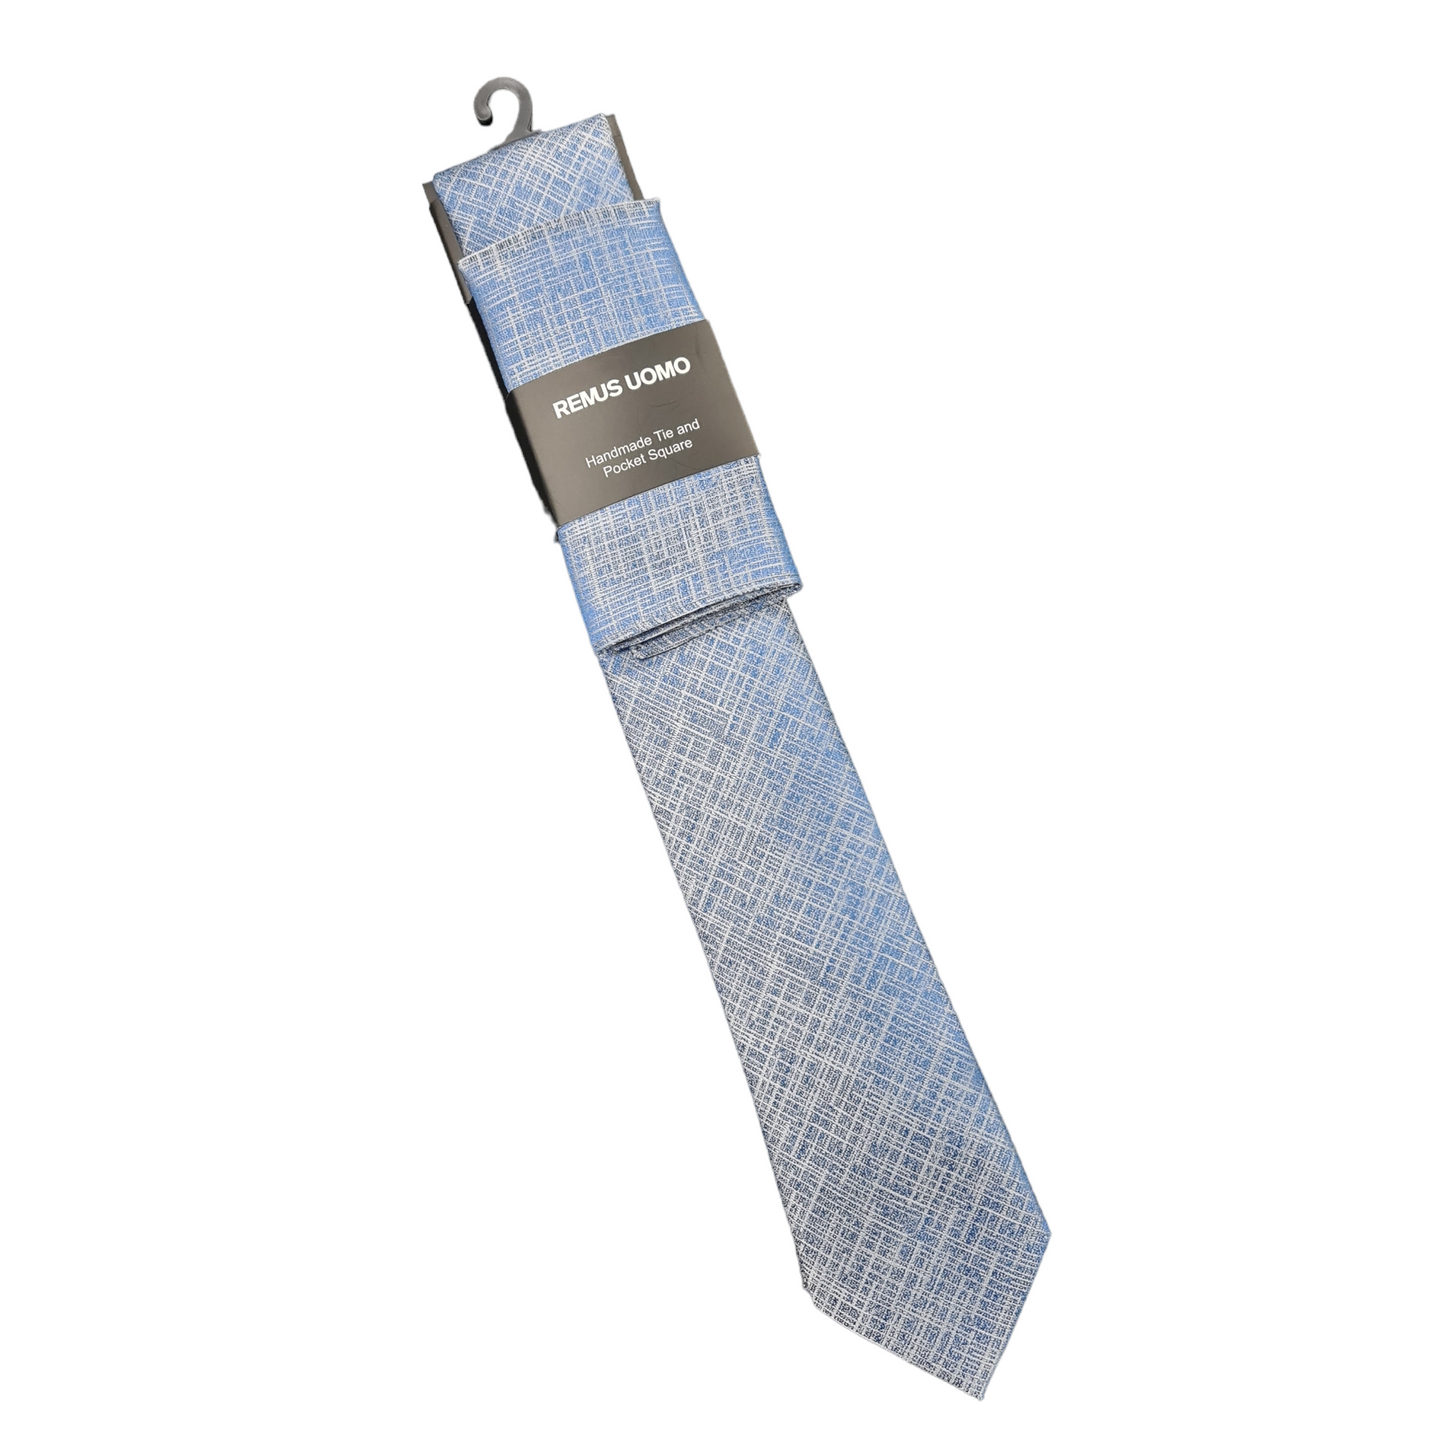 Remus Uomo TP5008 23 Blue Tie & Pocket Square Set